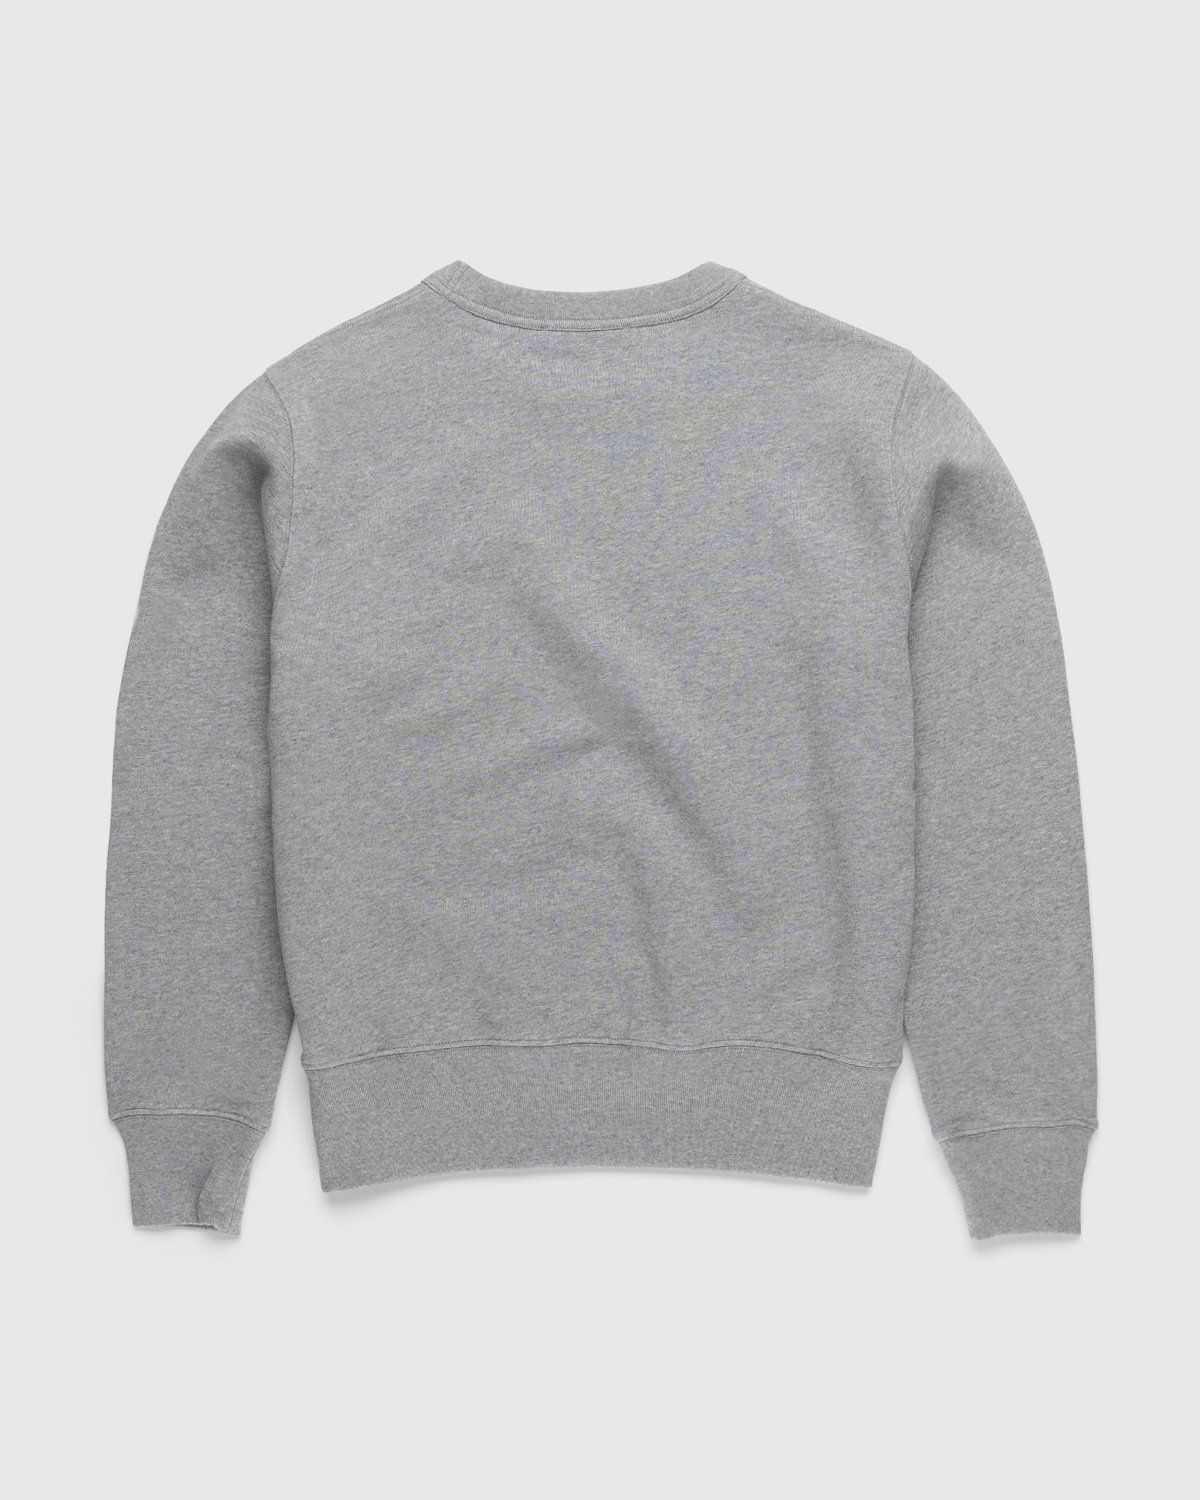 Acne Studios – Organic Cotton Crewneck Sweatshirt Light Grey Melange - Sweatshirts - Grey - Image 2